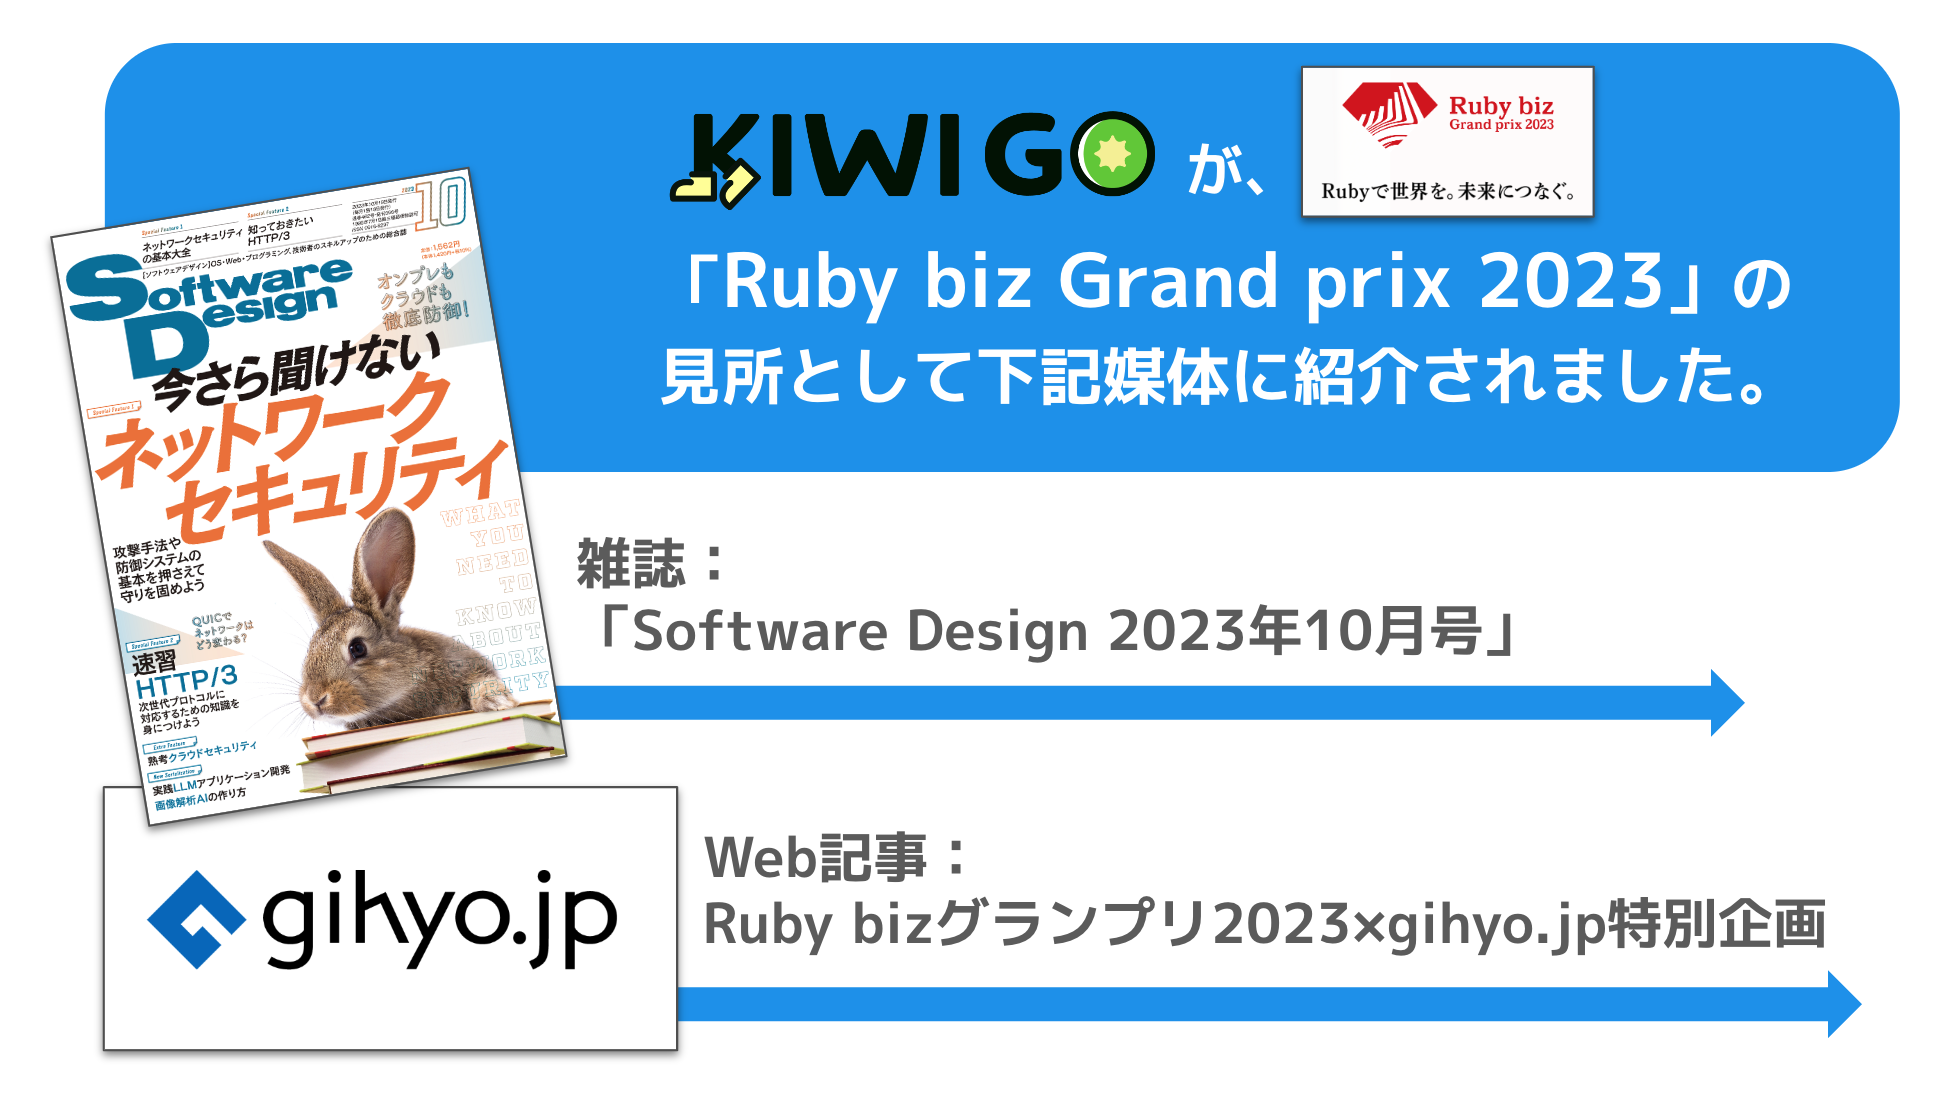 KIWI GOが『Ruby biz Grand prix 2023』の見所として「Software Design  2023年10月号」と「gihyo.jp」に紹介されました | 株式会社アジャイルウェア